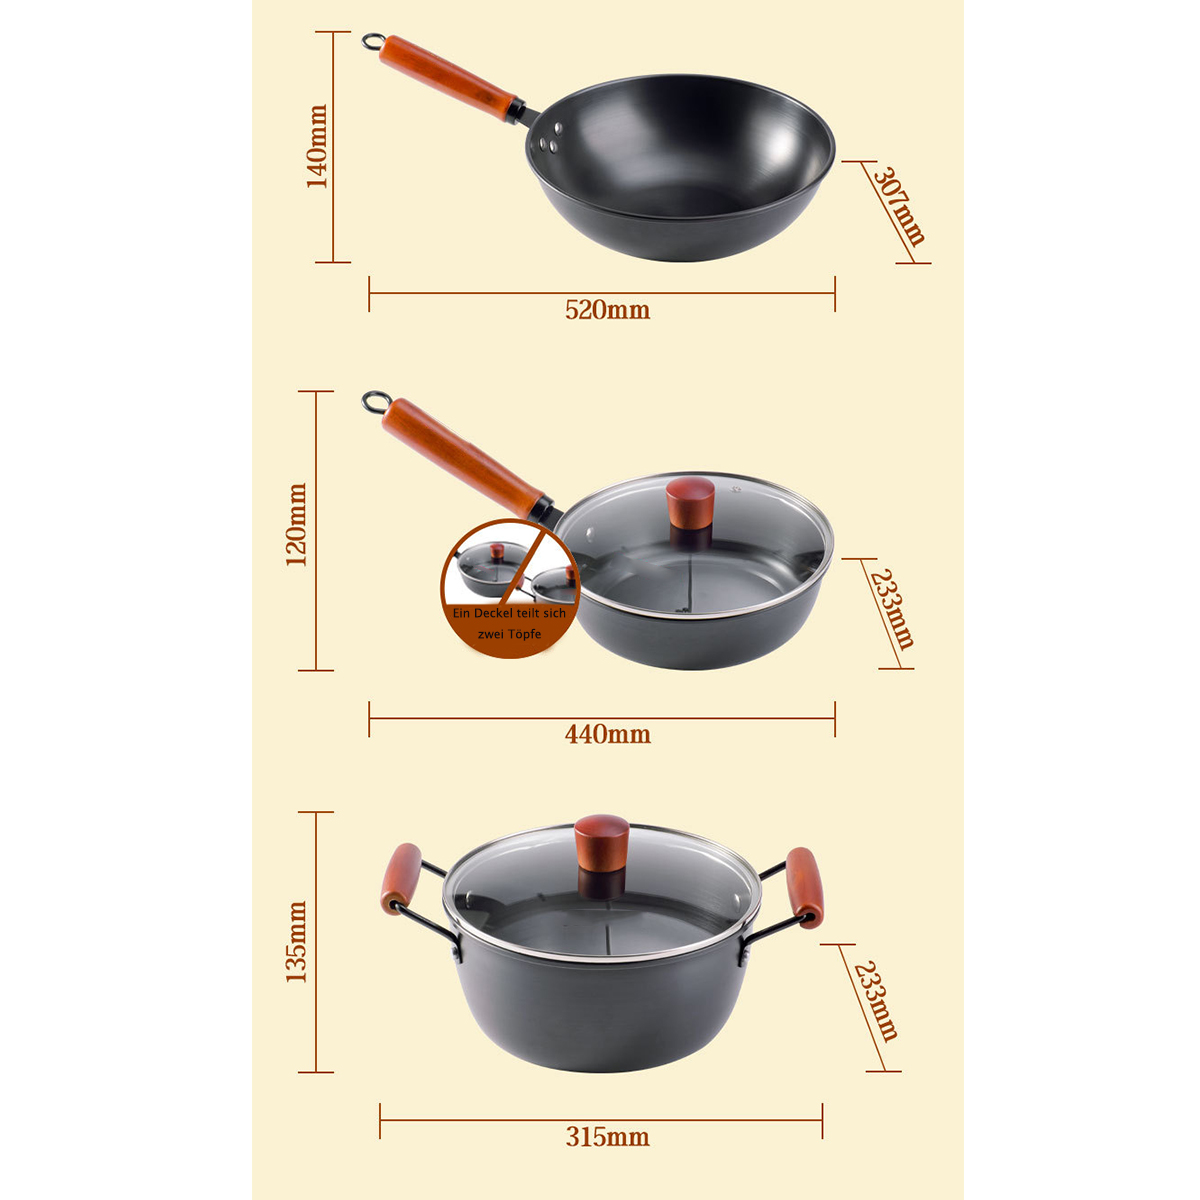 FEI Gesunde 3-teiliges Eisenpfannen Topf-Sets Antihaft-Kochgeschirr-Set Gleichmäßige Wärmeverteilung